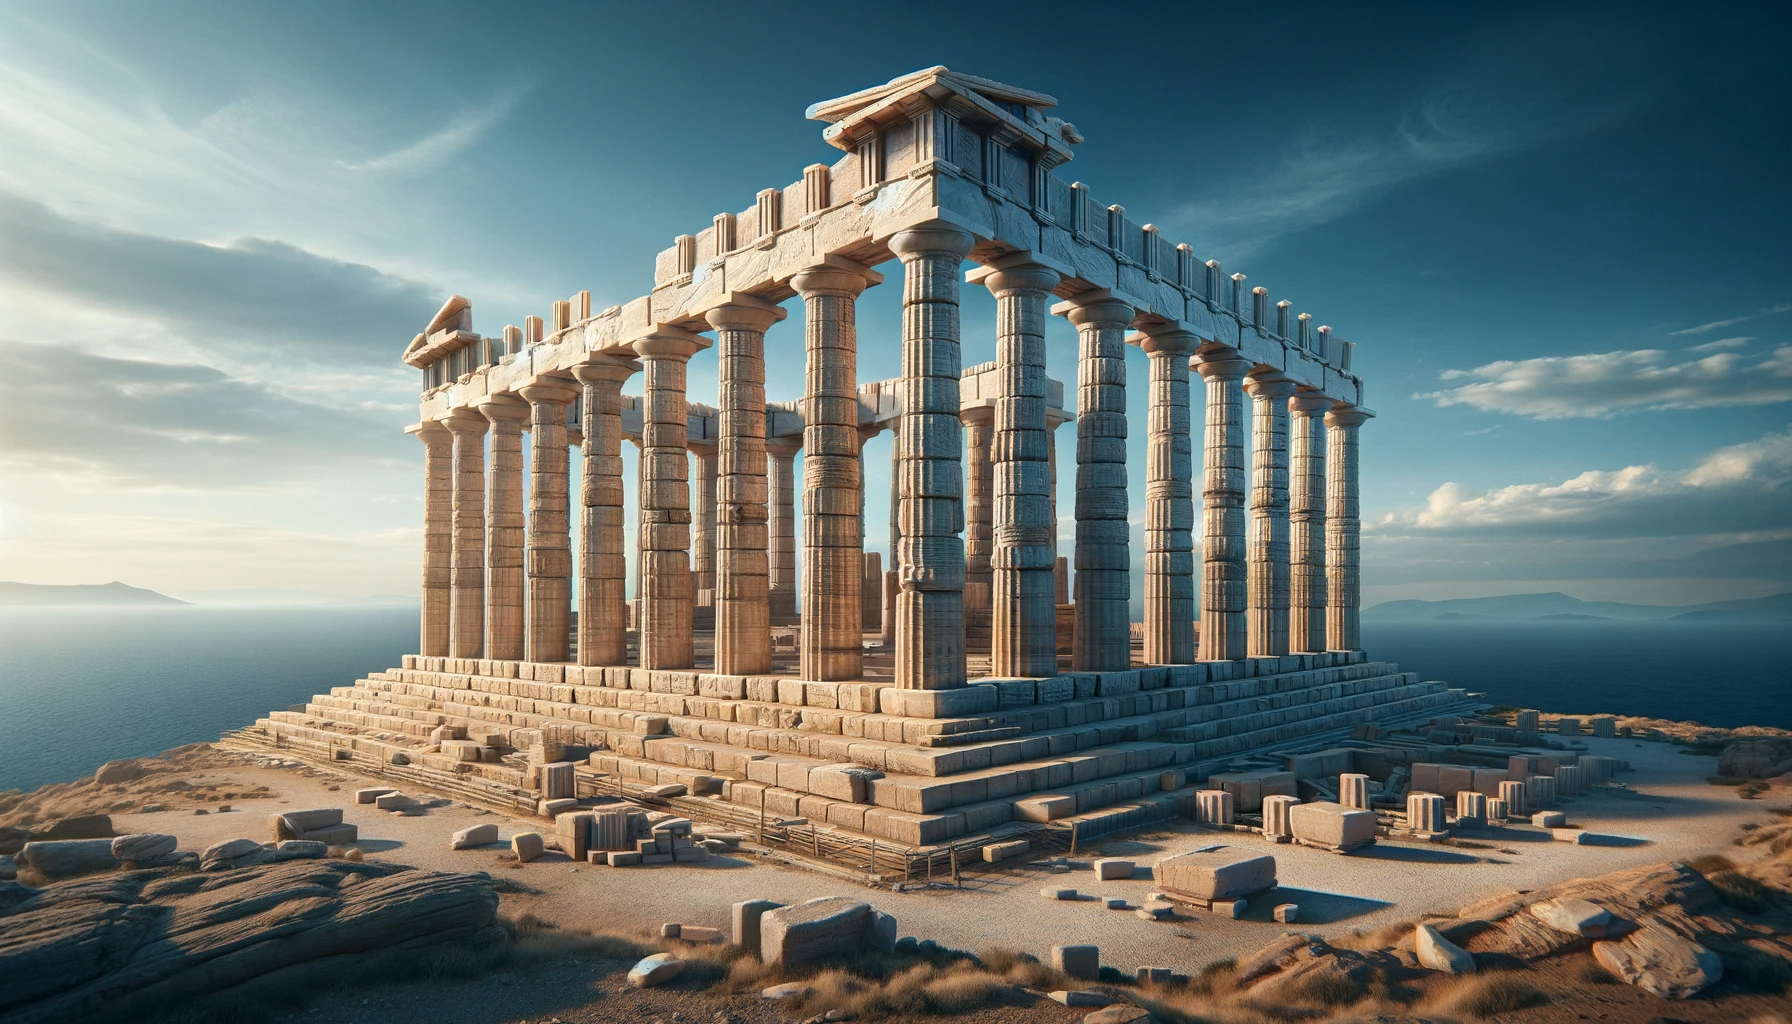 Realistic Image of Temple of Poseidon